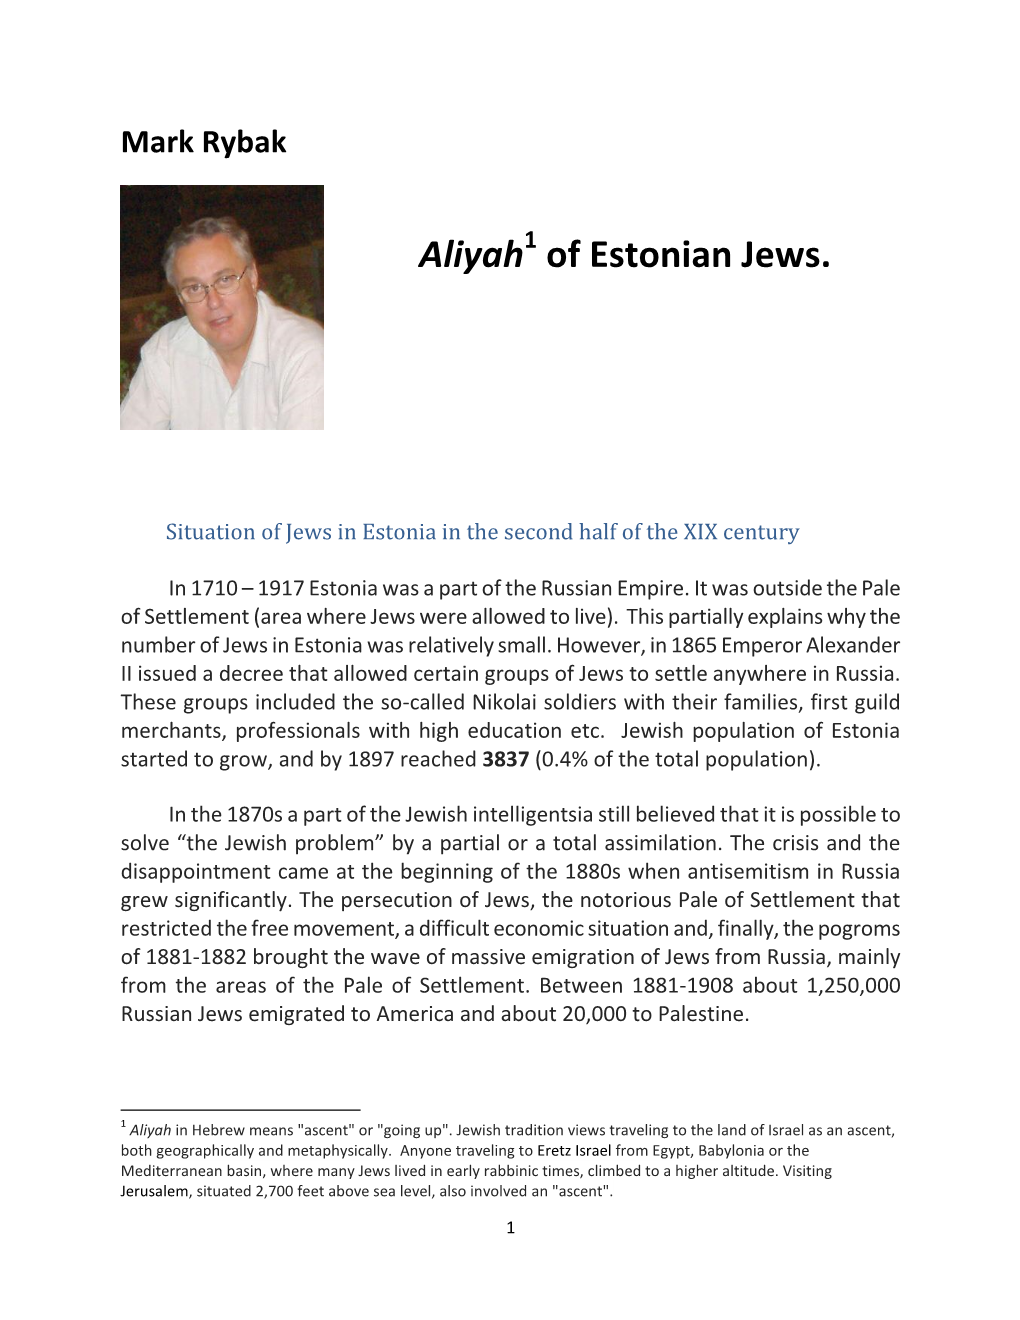 Aliyah of Estonian Jews